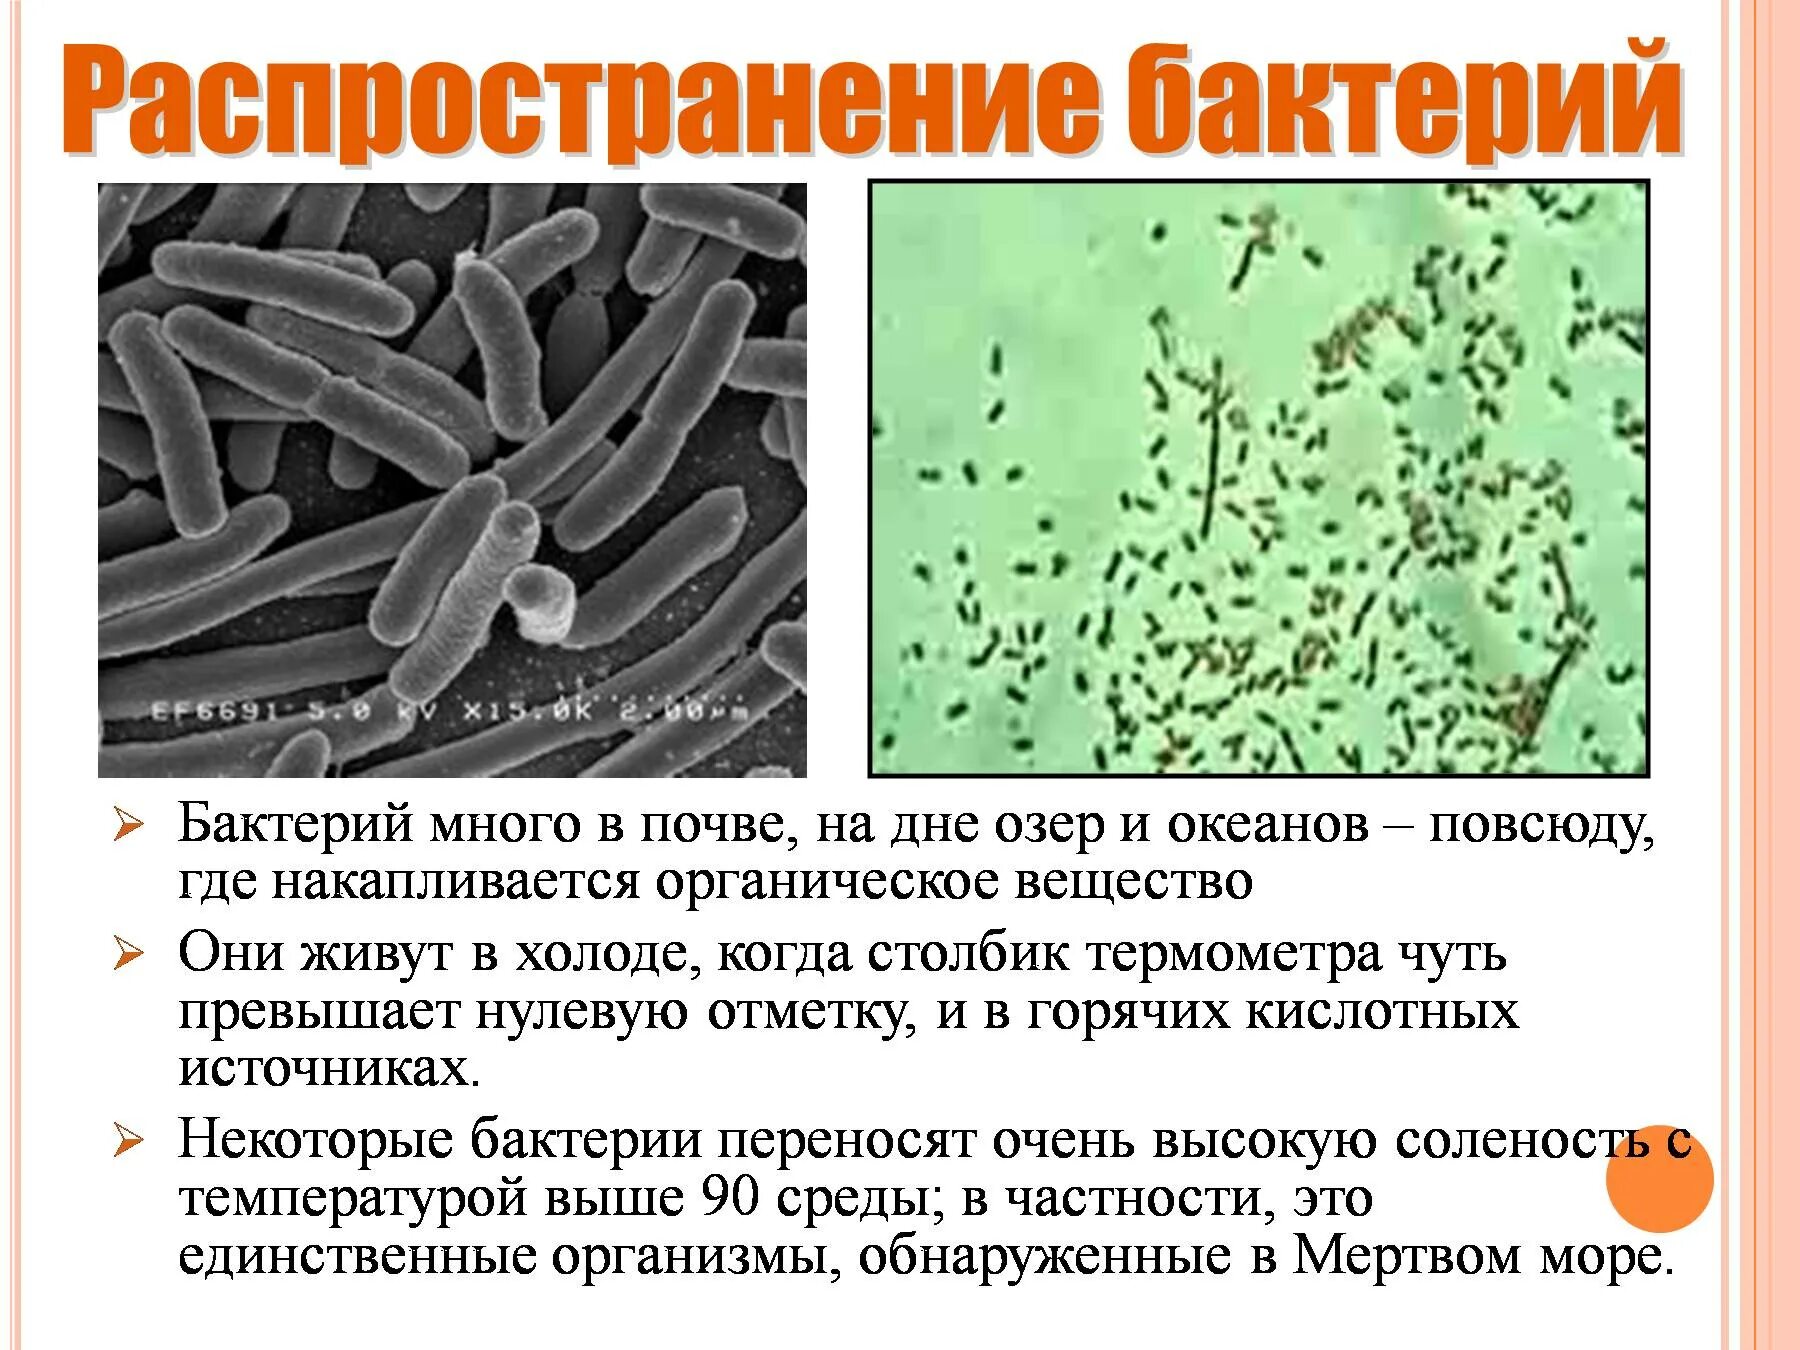 Царство бактерий 5 класс биология. Представители царства бактерий 5 класс. Характеристика царства бактерий 5 класс. Характеристика бактерий 5 класс биология. Почему бактерии считают